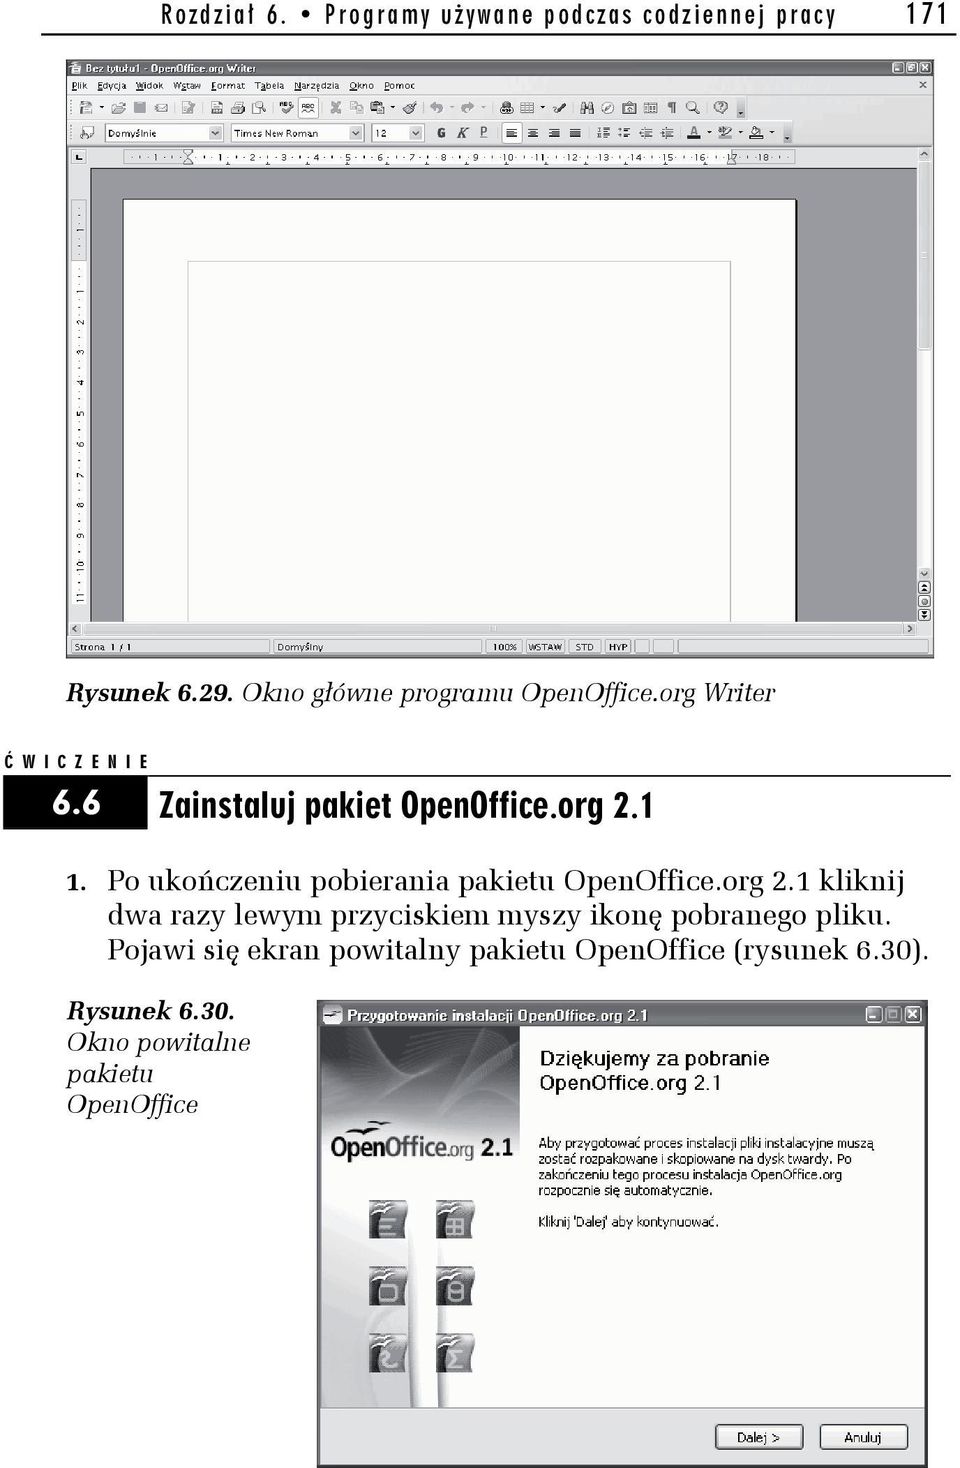 Po ukończeniu pobierania pakietu OpenOffice.org 2.